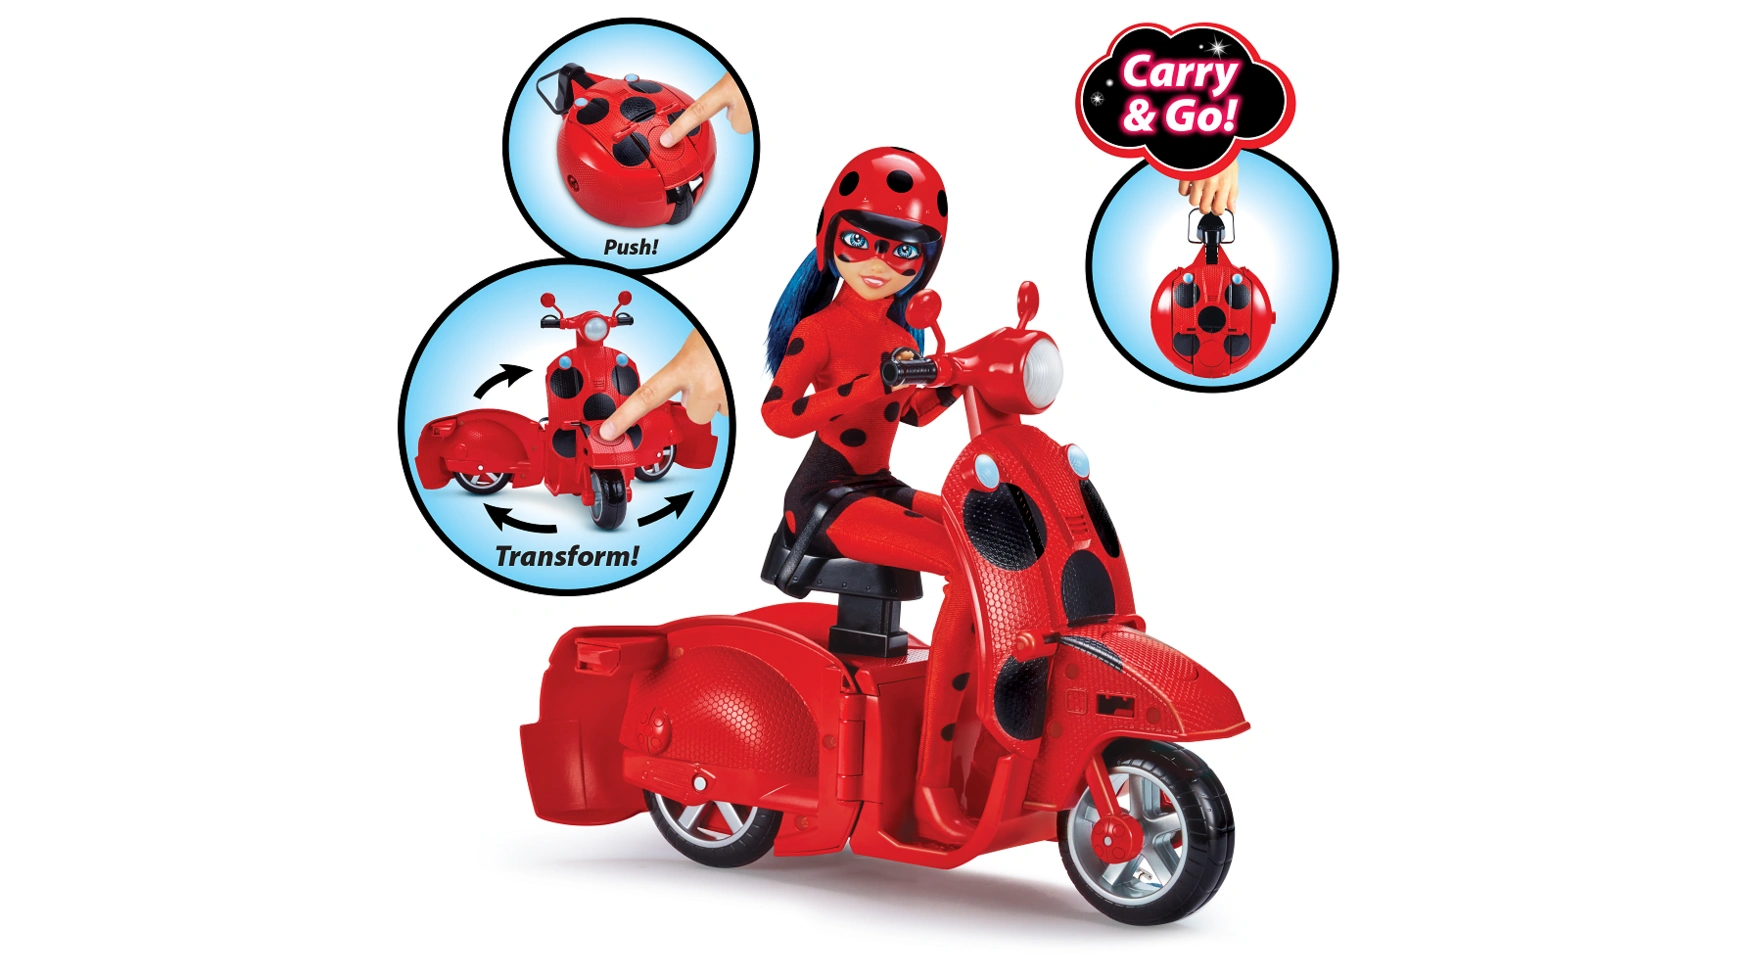 Bandai Чудесная кукла Божья коровка Lucky Charm со скутером Switch 'n go божья коровка